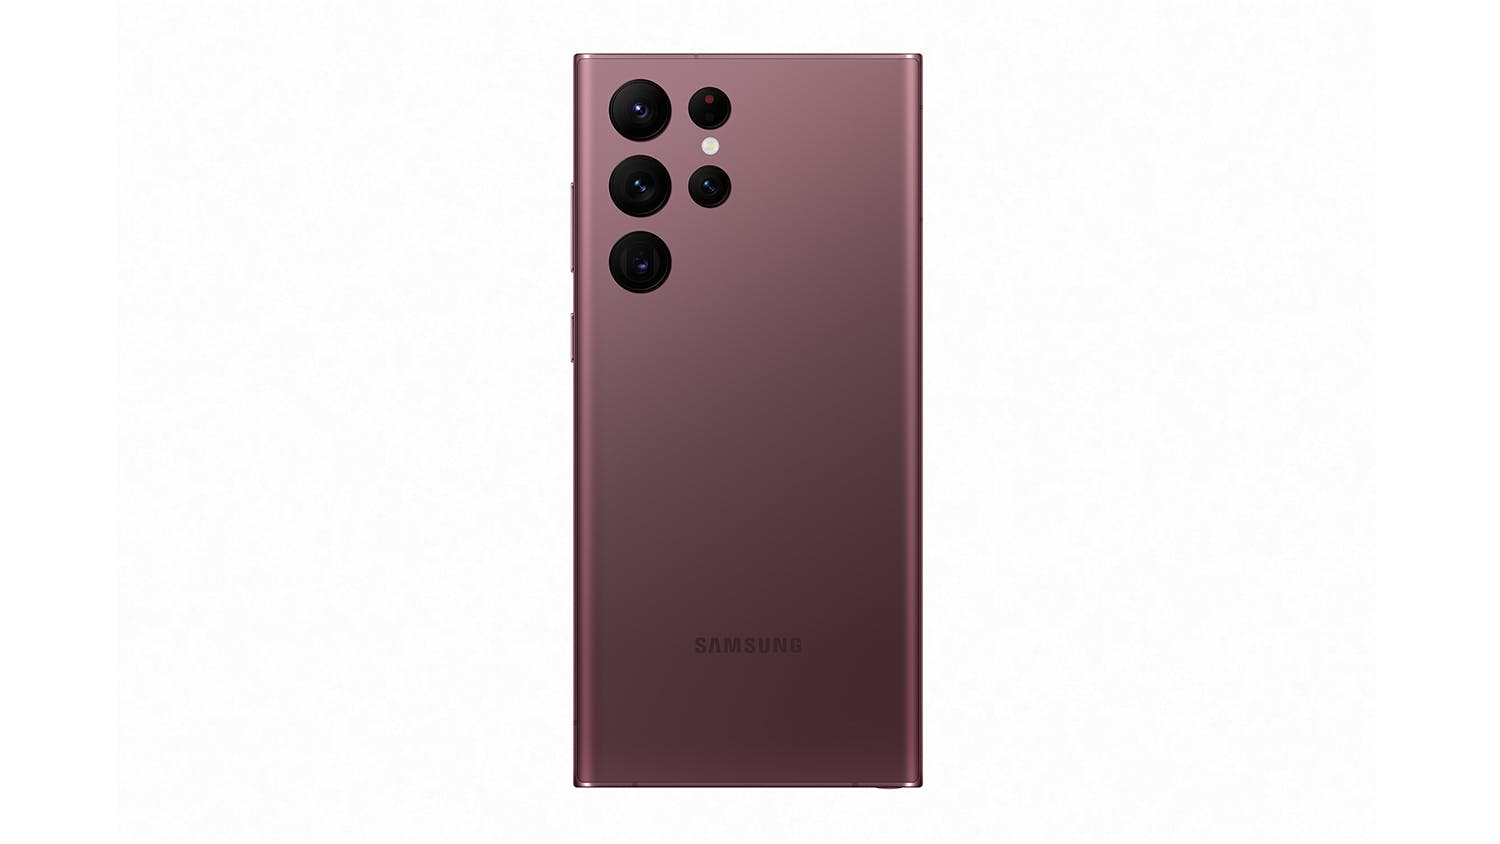 Samsung Galaxy S22 Ultra 5G 256GB Smartphone - Burgundy (Spark/Open Network)